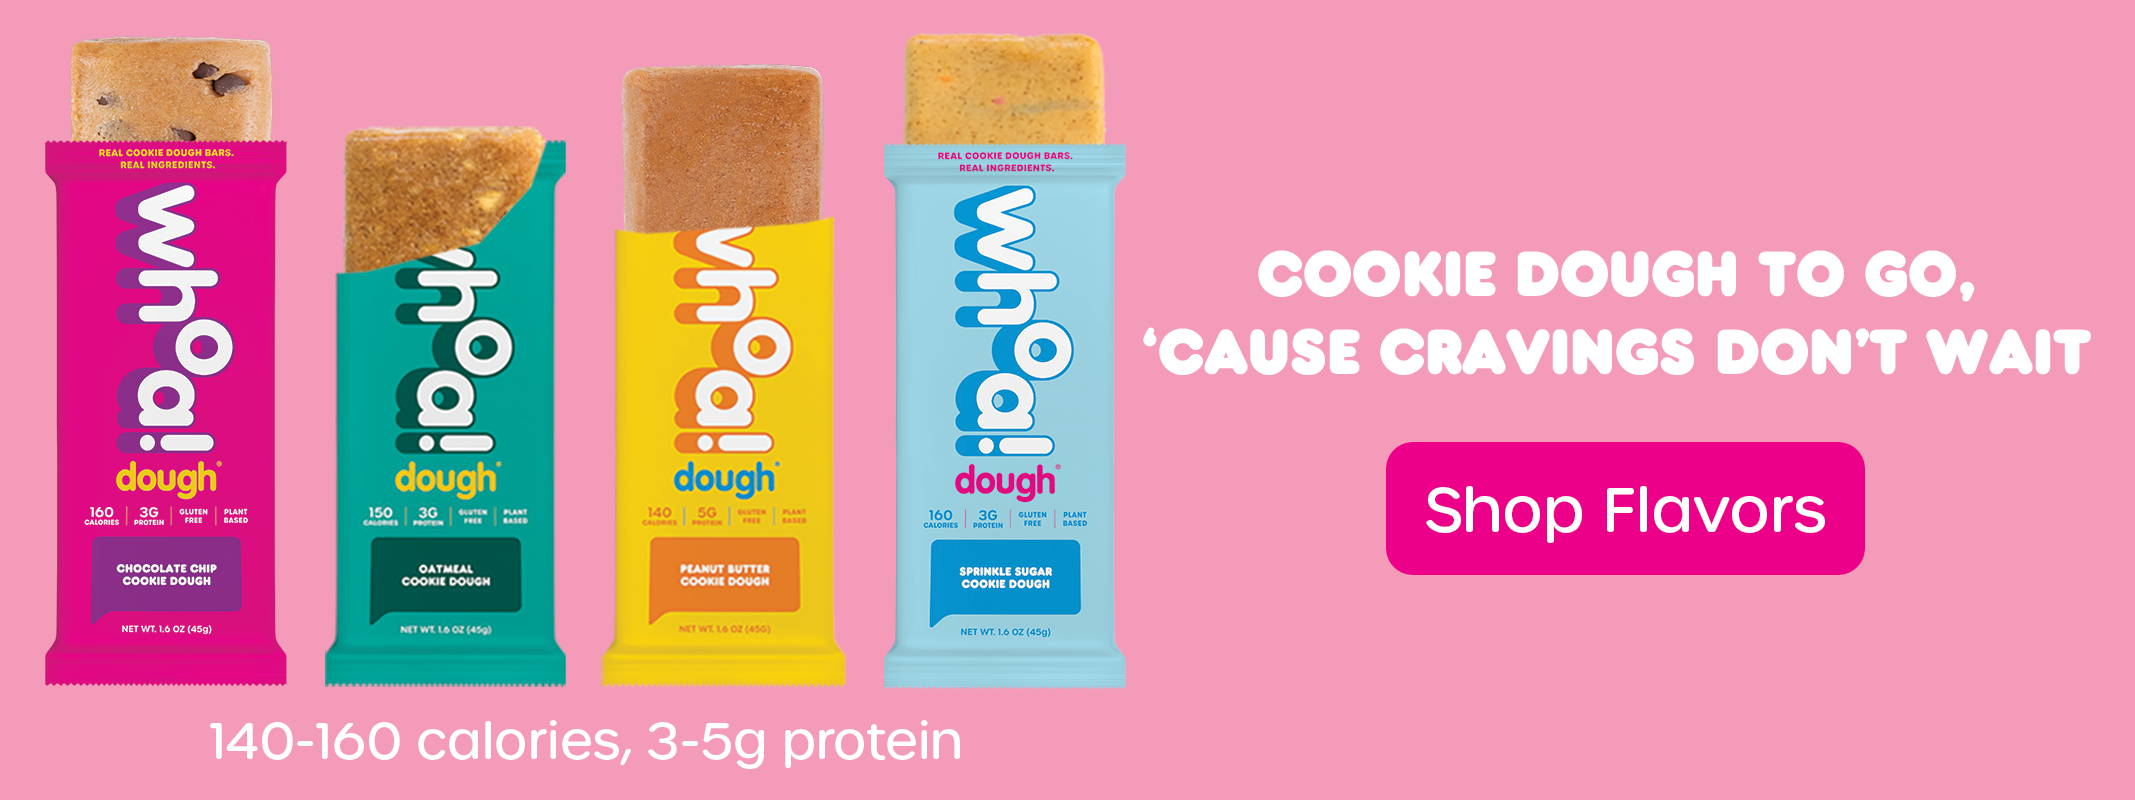 Whoa Dough  Plant Based Gluten Free Cookie Dough Snack Bars